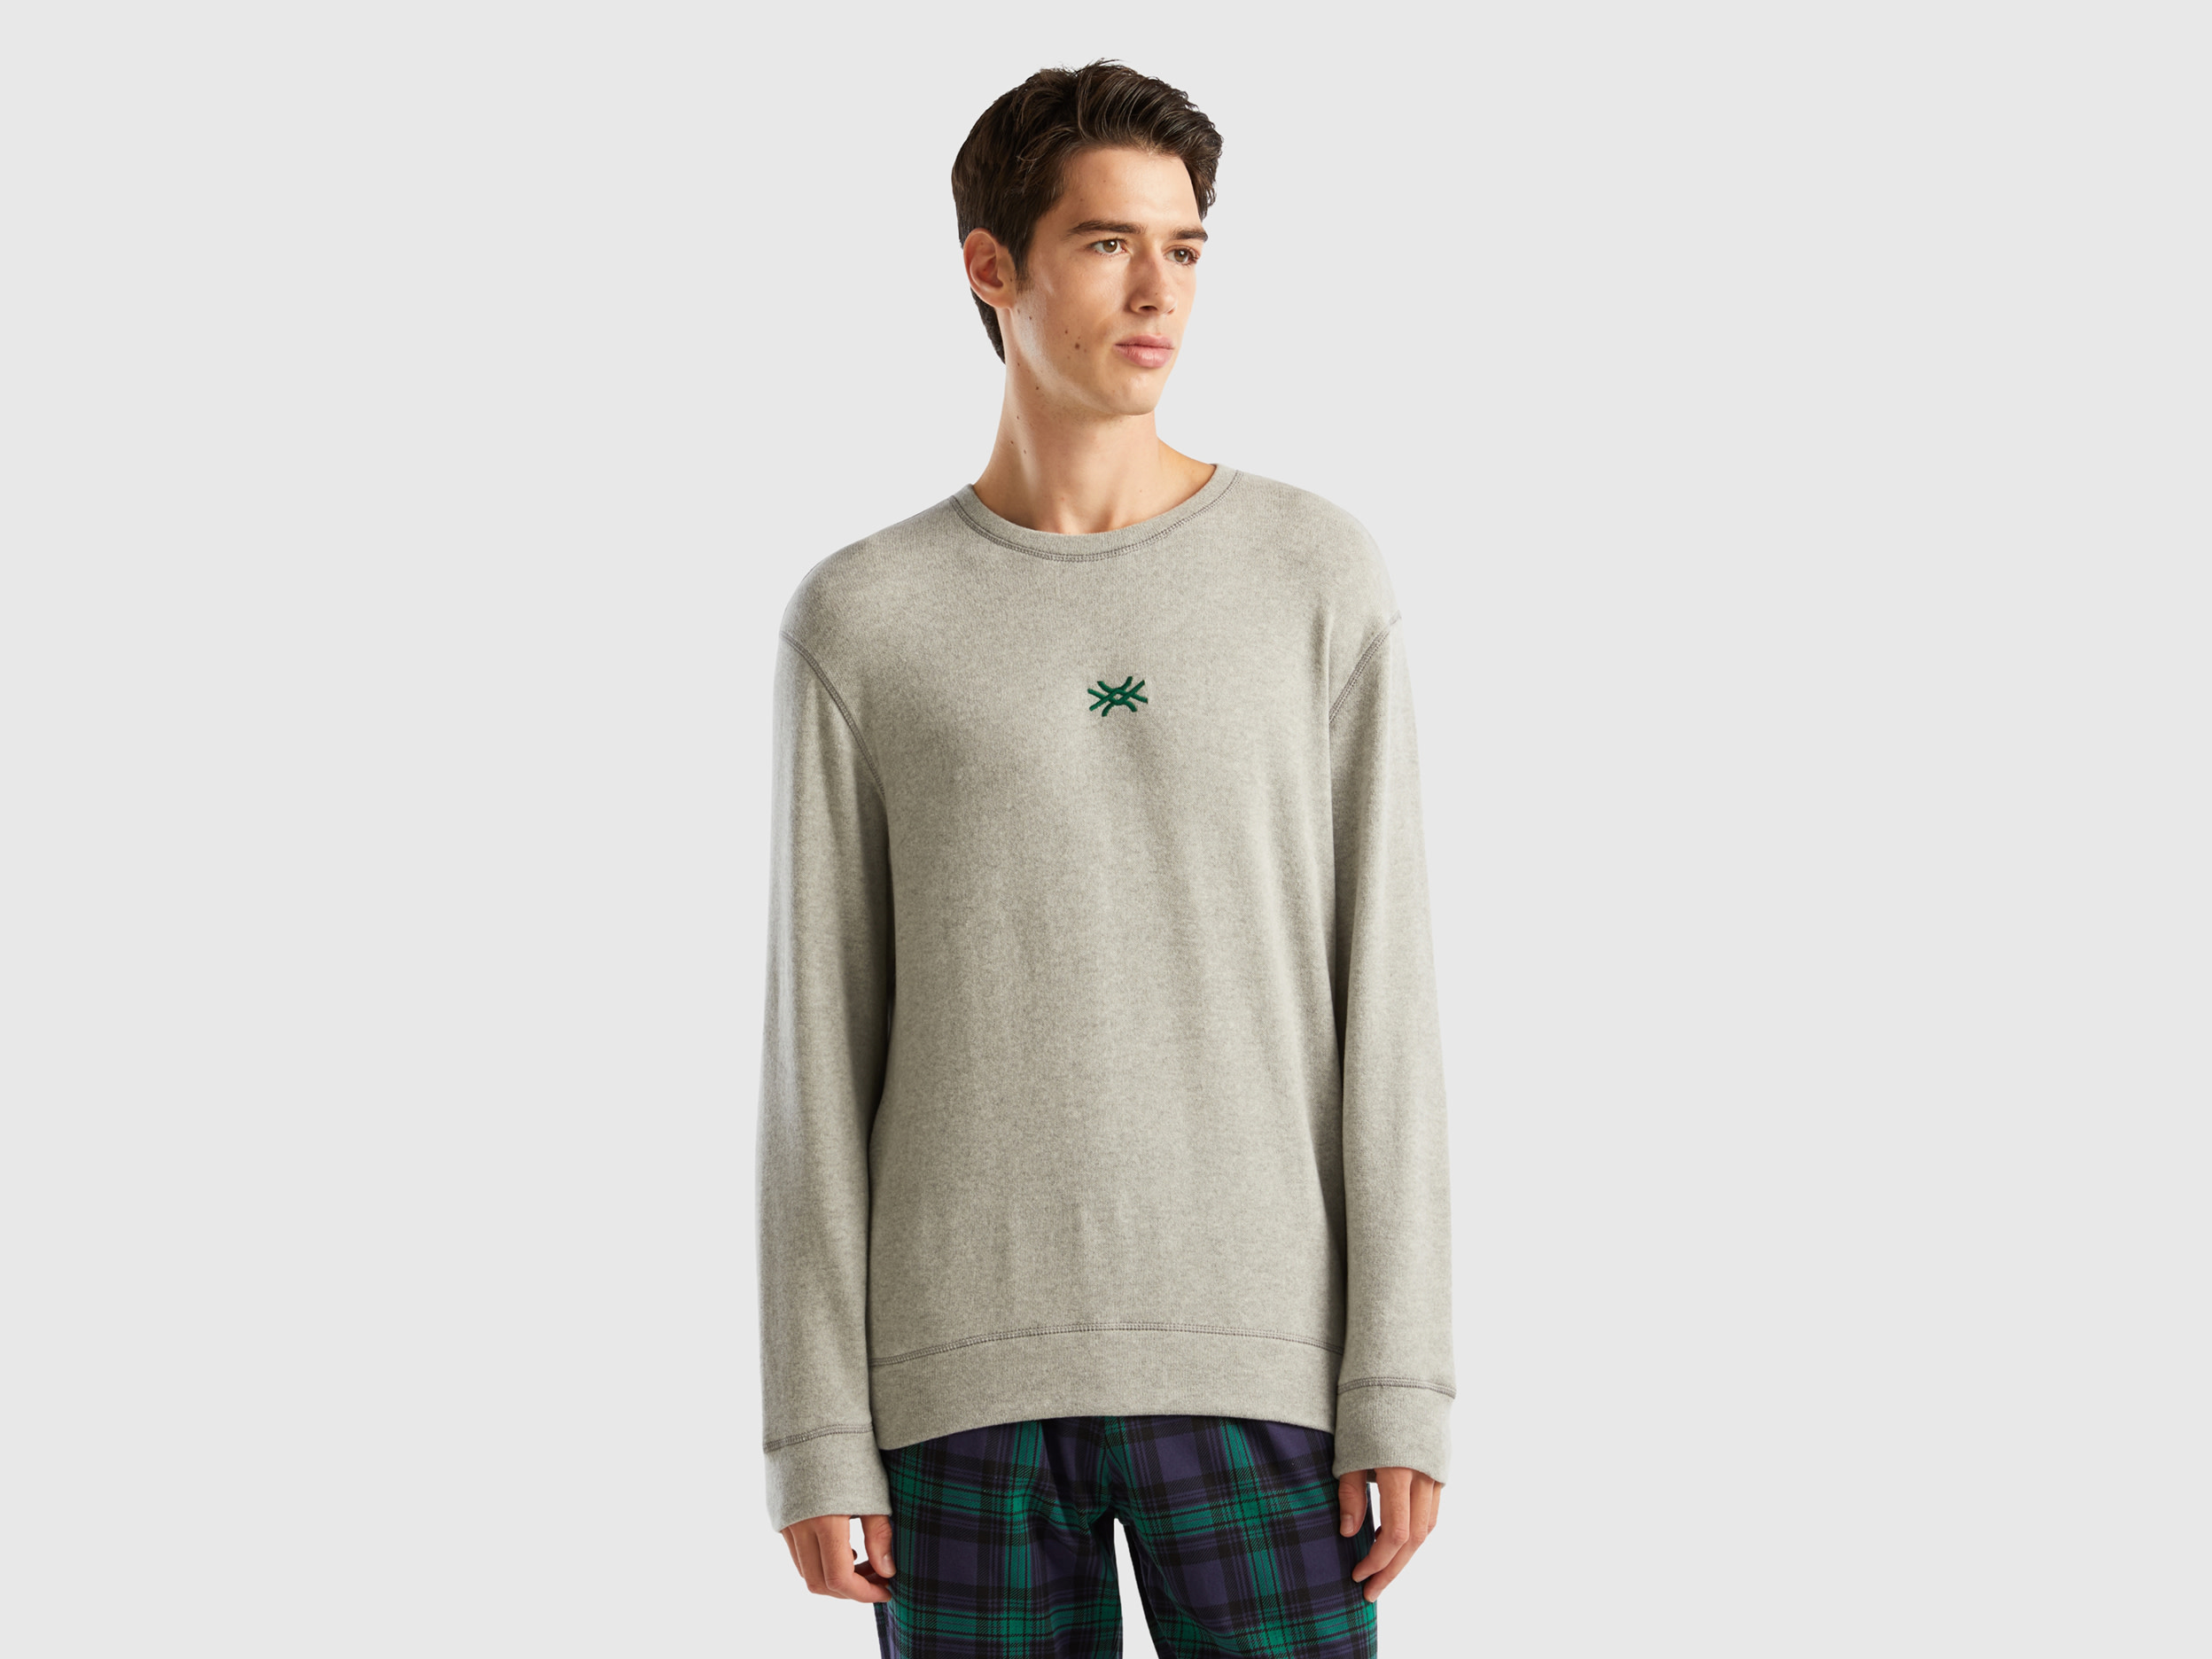 Benetton, Warm Stretch Cotton Blend Sweater, size M, Light Gray, Men